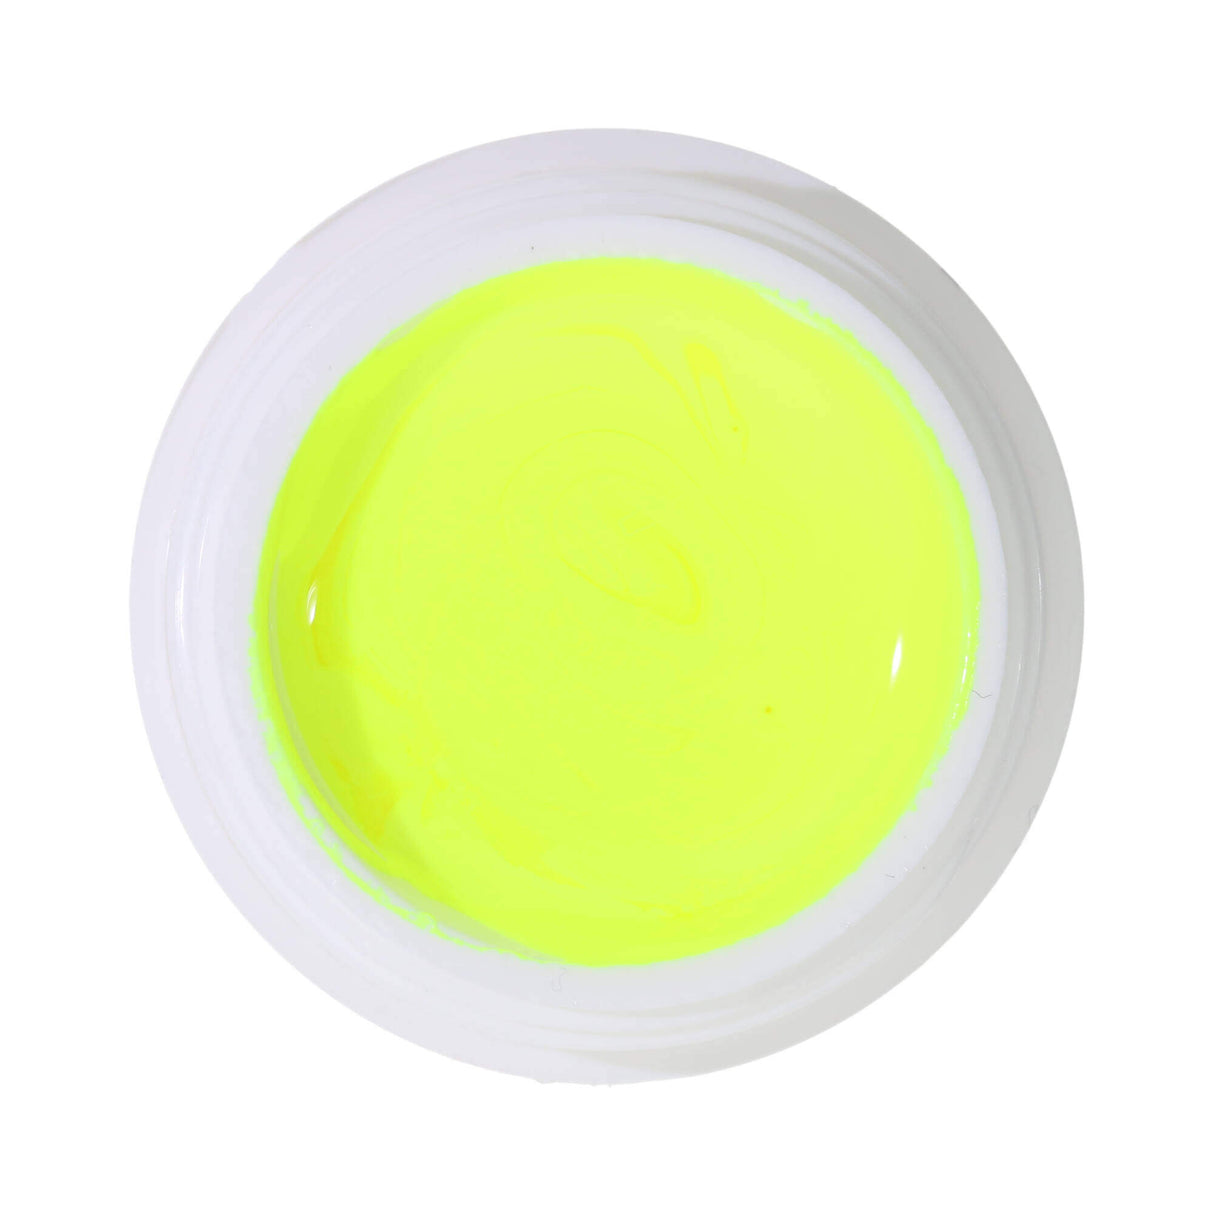 #569 Premium-DEKO Color Gel 5ml Neon NOT FOR COSMETIC USE